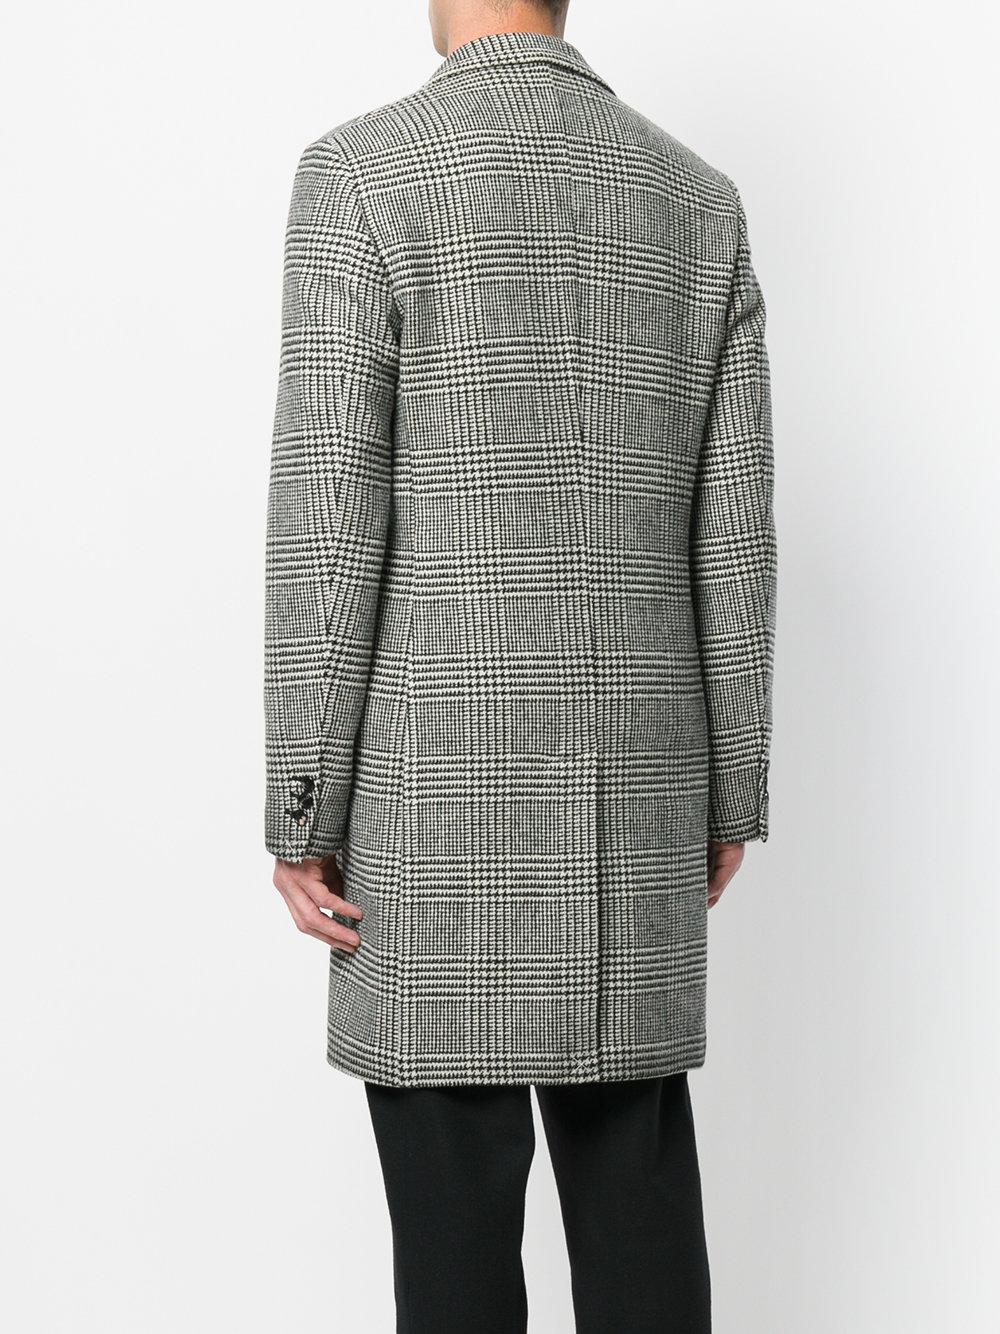 Dondup Wool Glen Check Pattern Coat in Black for Men - Lyst